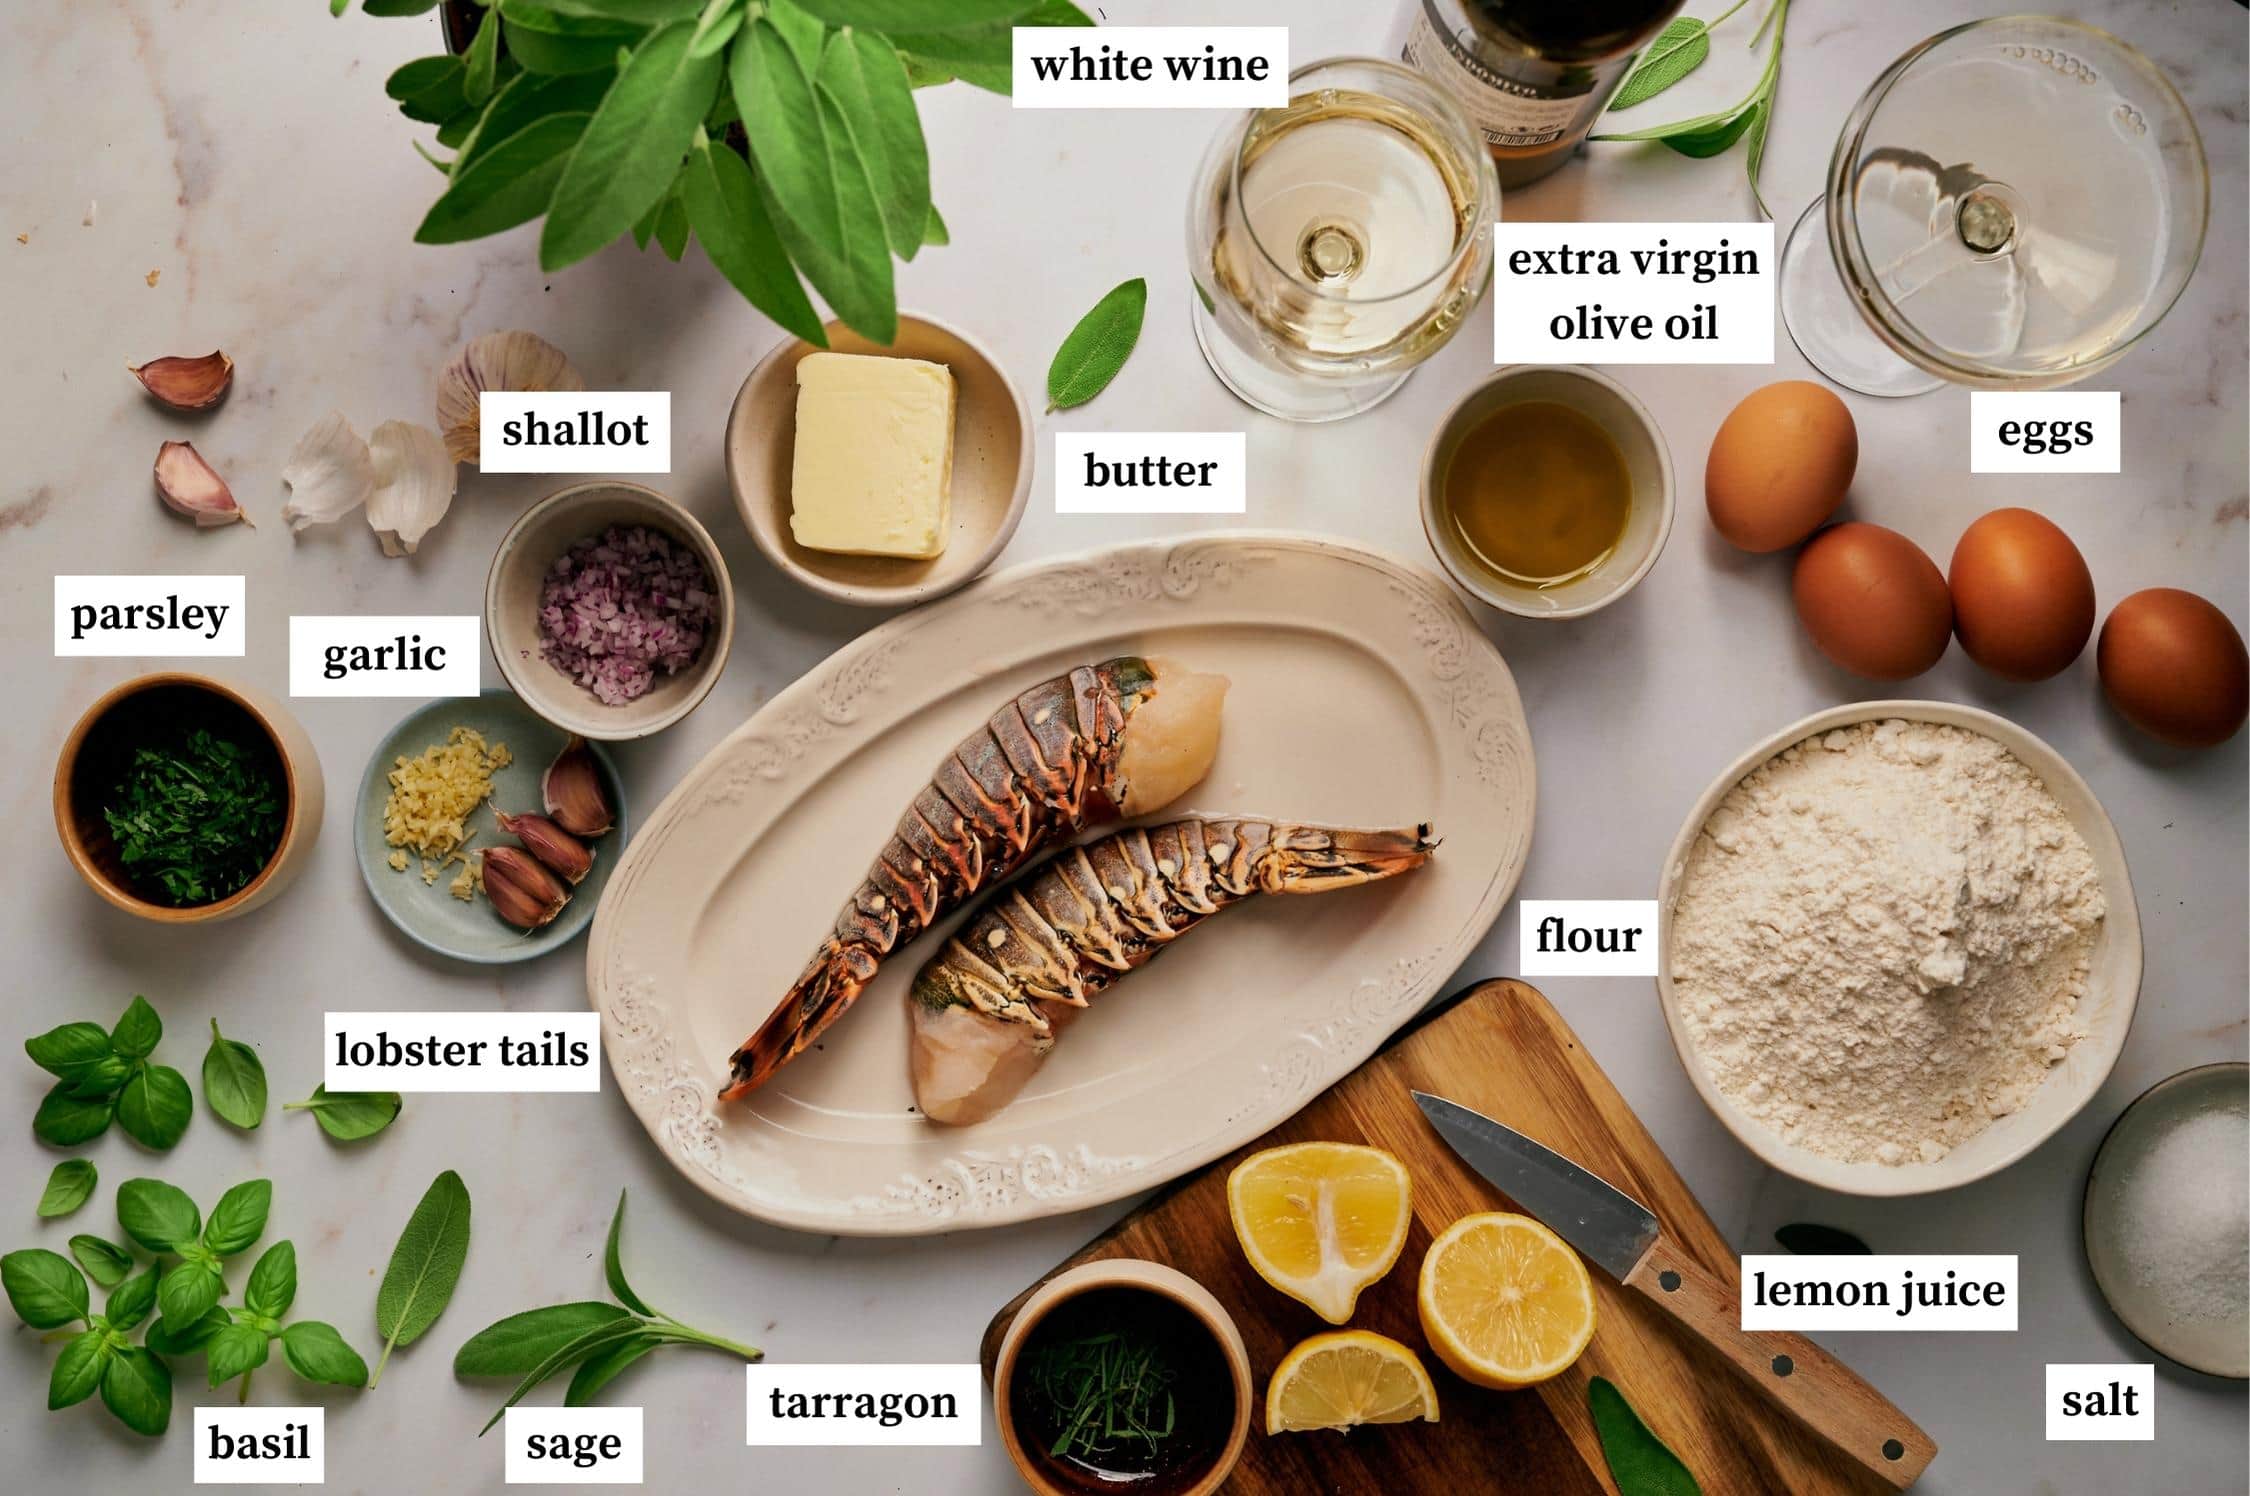 Ingredients for Lobster Ravioli: white wine, extra virgin olive oil, eggs, flour, lemon juice, salt, tarragon, sage, basil, garlic, parsley, shallot and butter.